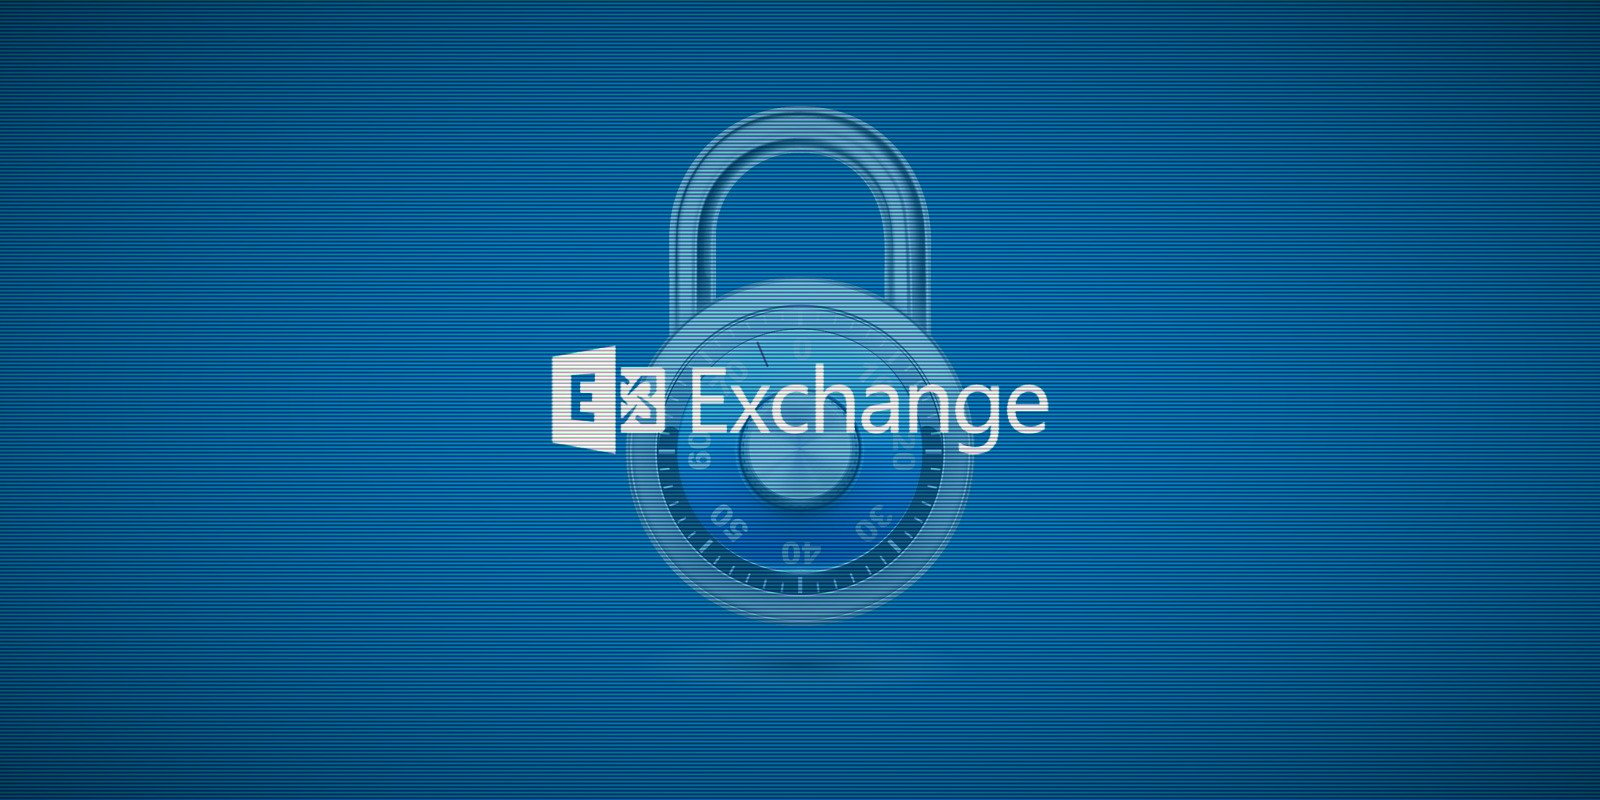 Microsoft Exchange ransomware